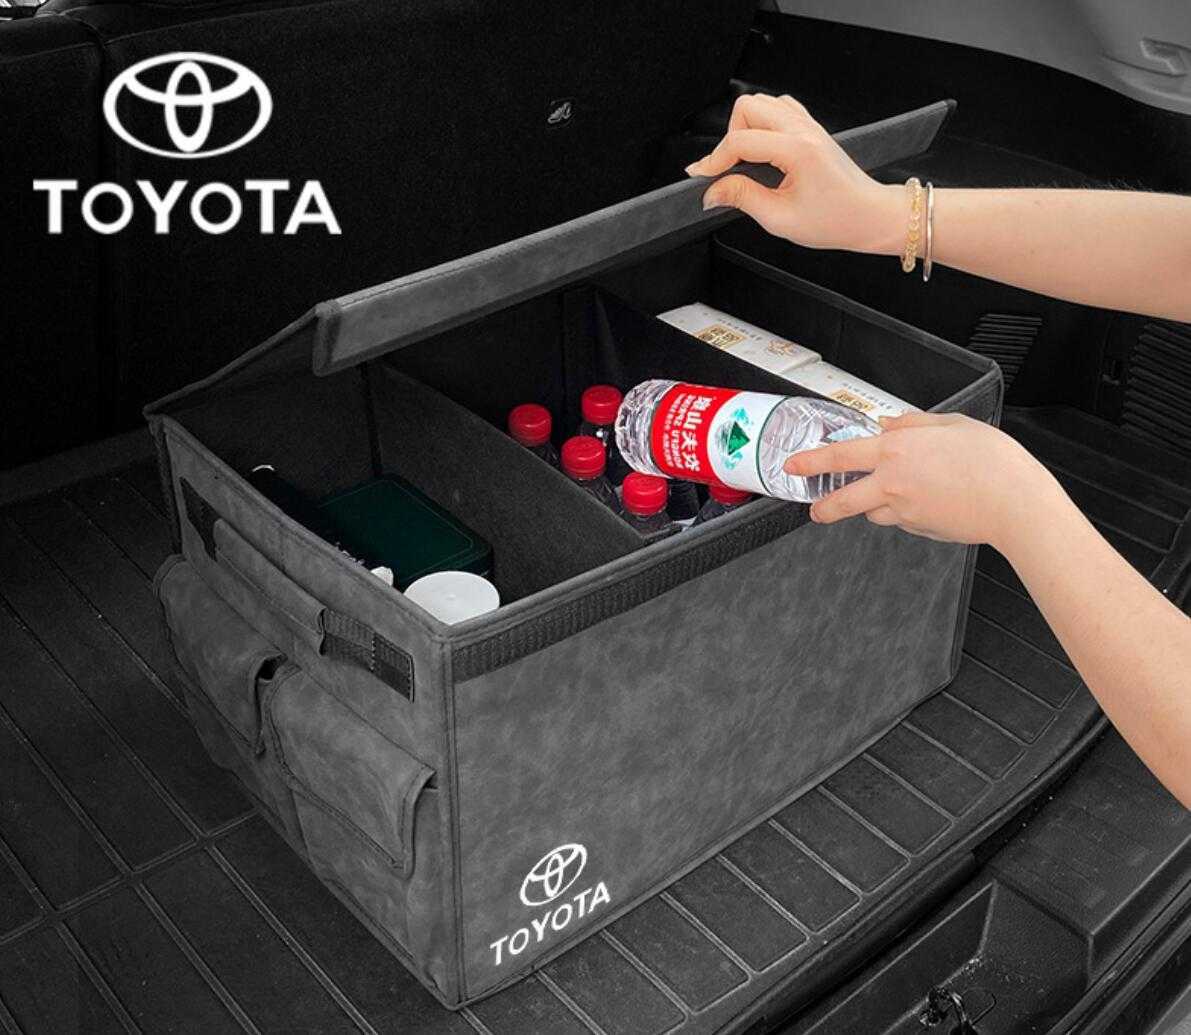 【TOYOTA】 汎用自動車ト内収納ボックス 大容量トランクバッグ ベージュ 車内アクセサリー 限定でセール価格